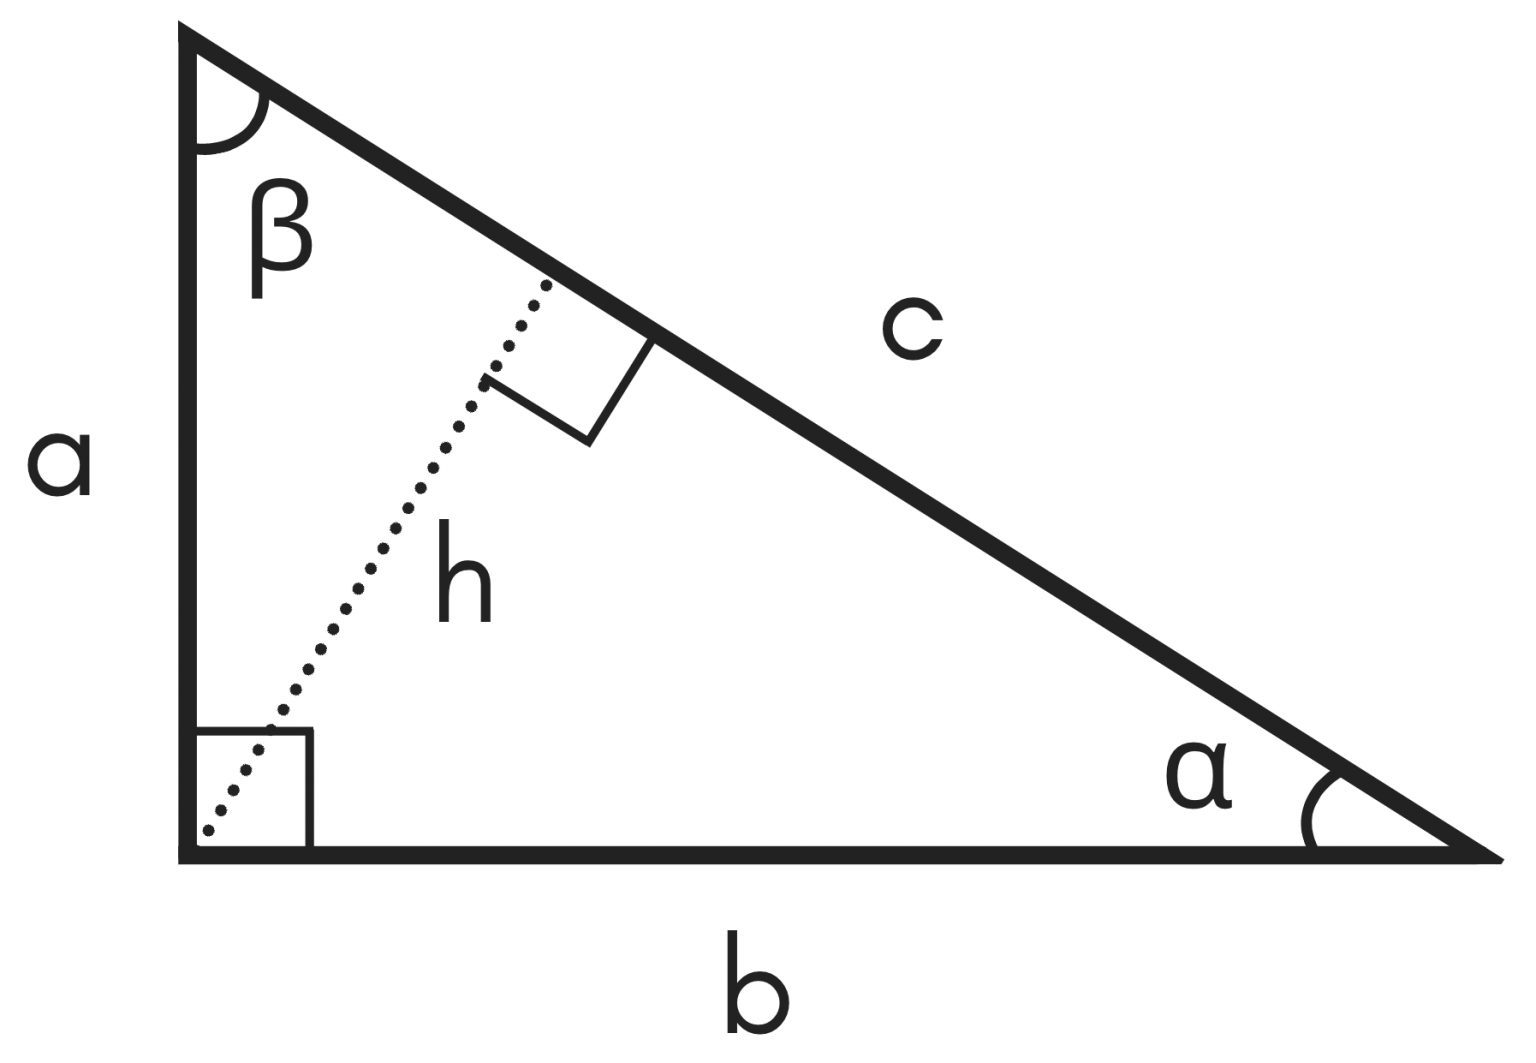 isosceles right triangle volume formula